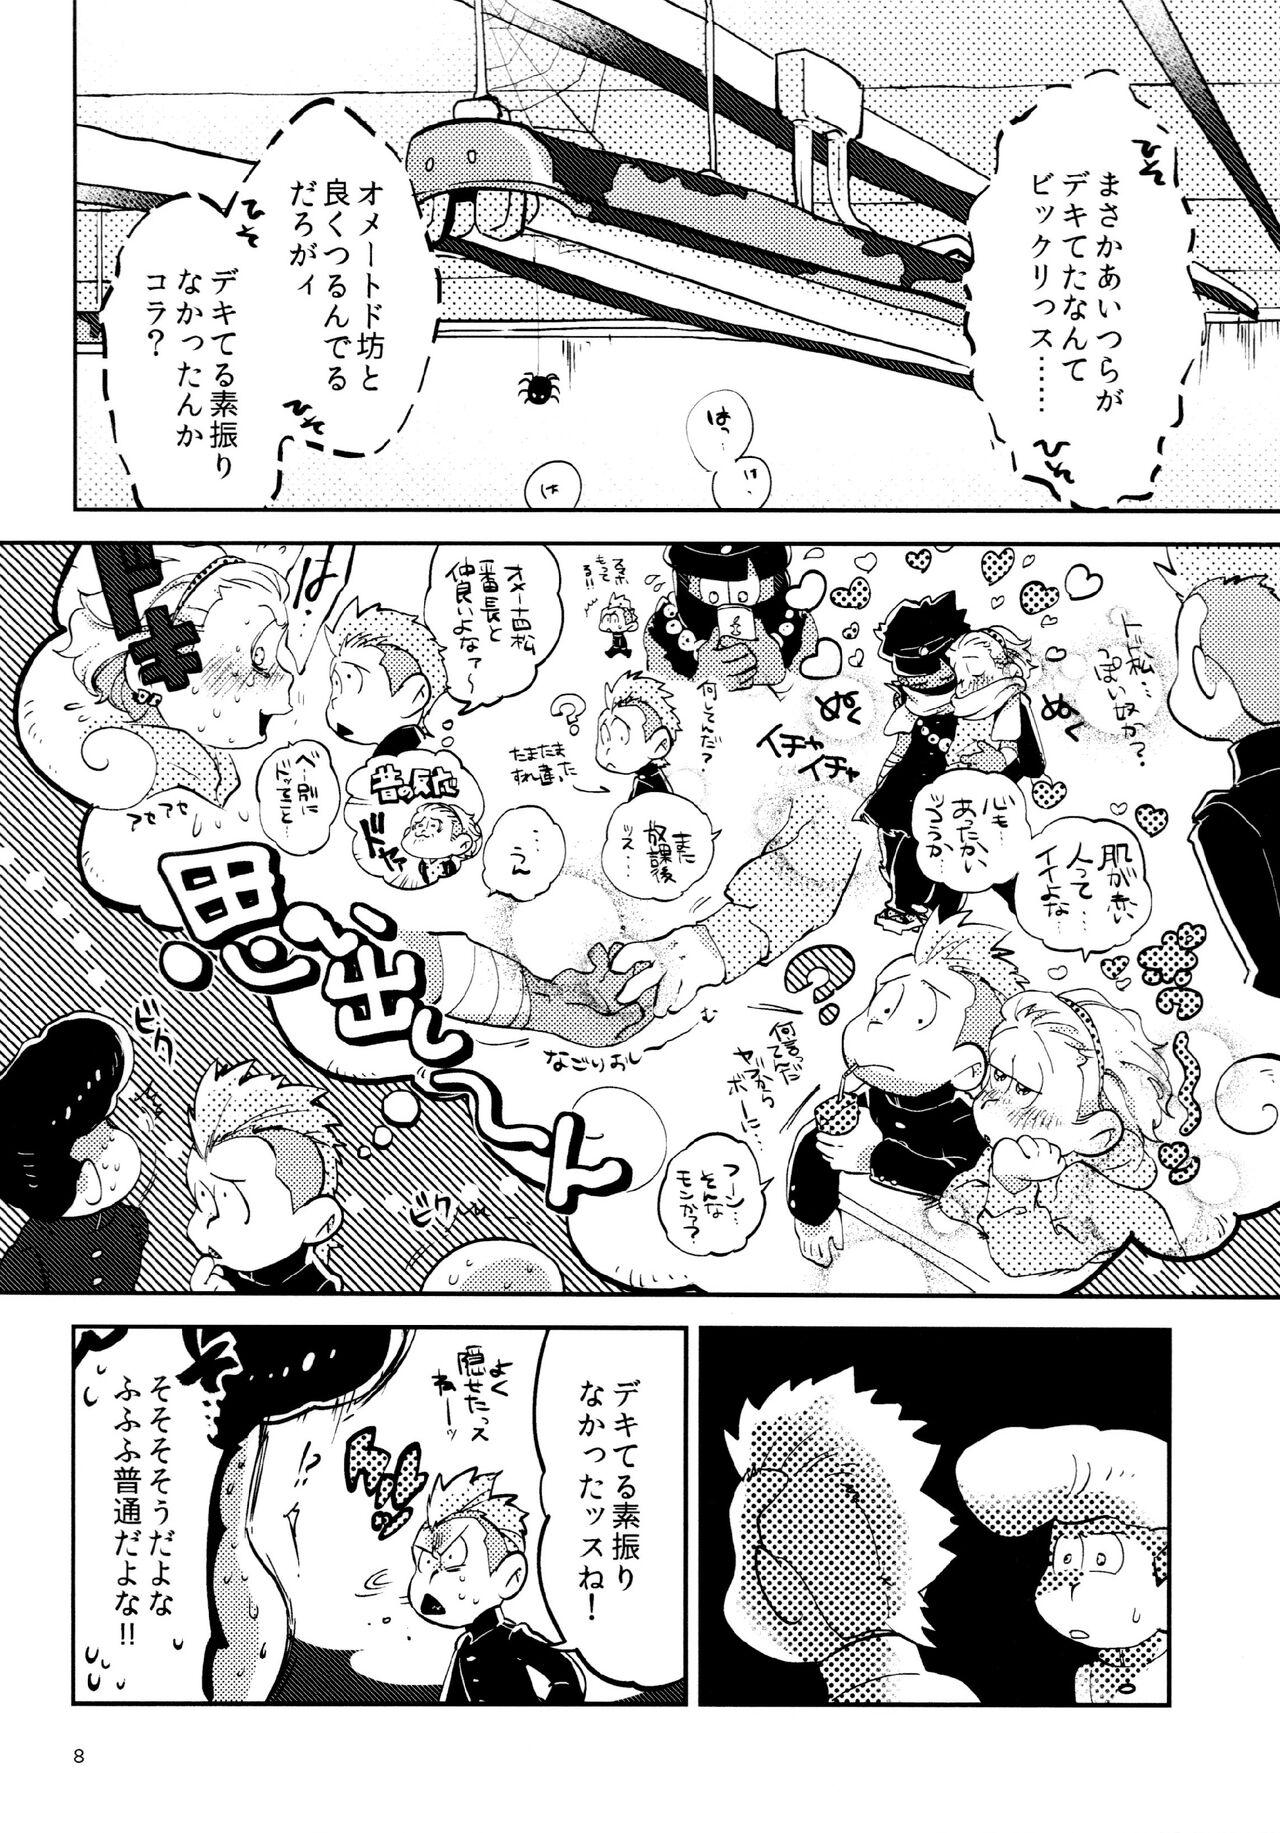 Gay Medical Amaebitamago (gyuunyuu) gaman joutou airabuyuu (Osomatsu-san) - Osomatsu san Parody - Page 8